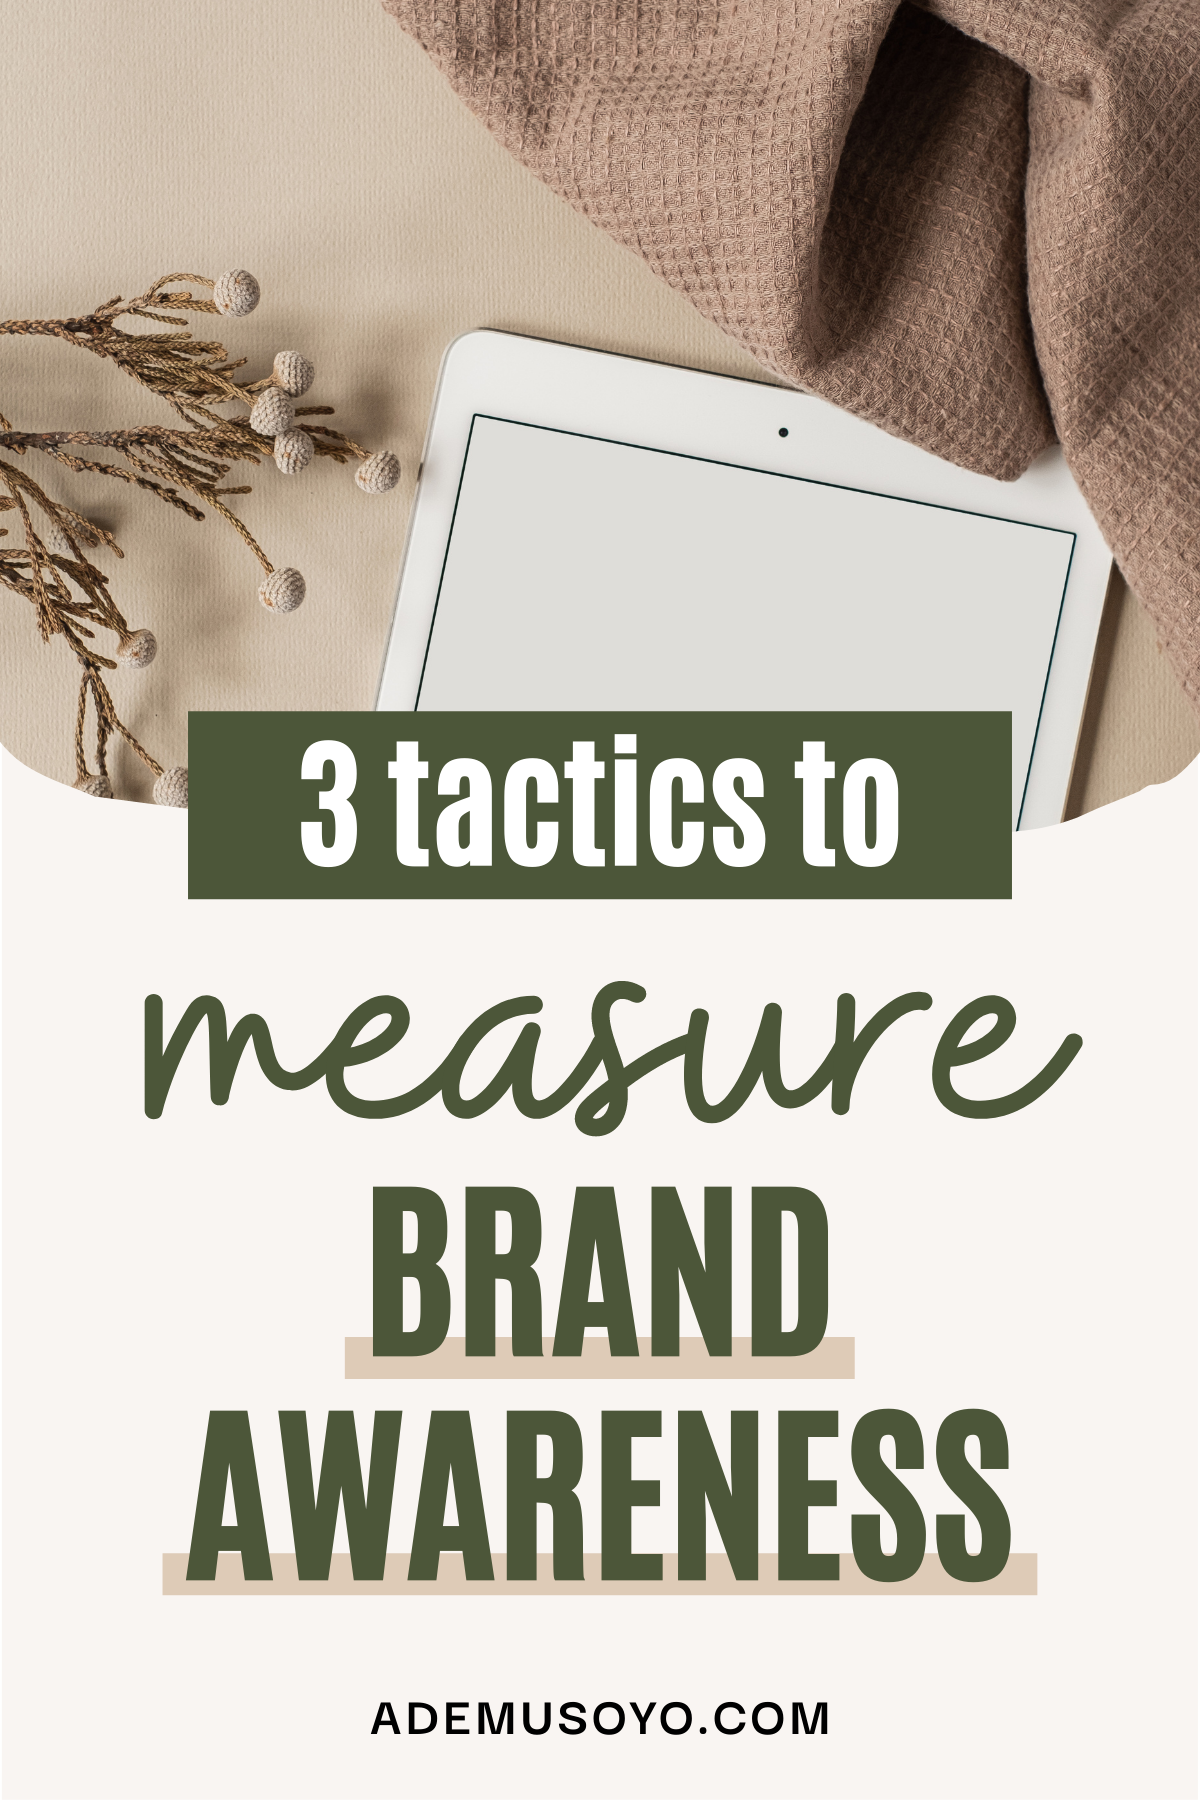 How To Measure Brand Awareness: 3 Tactics that Work, increase brand awareness, brand awareness metrics, measure brand awareness and reputation, ways to measure brand awareness